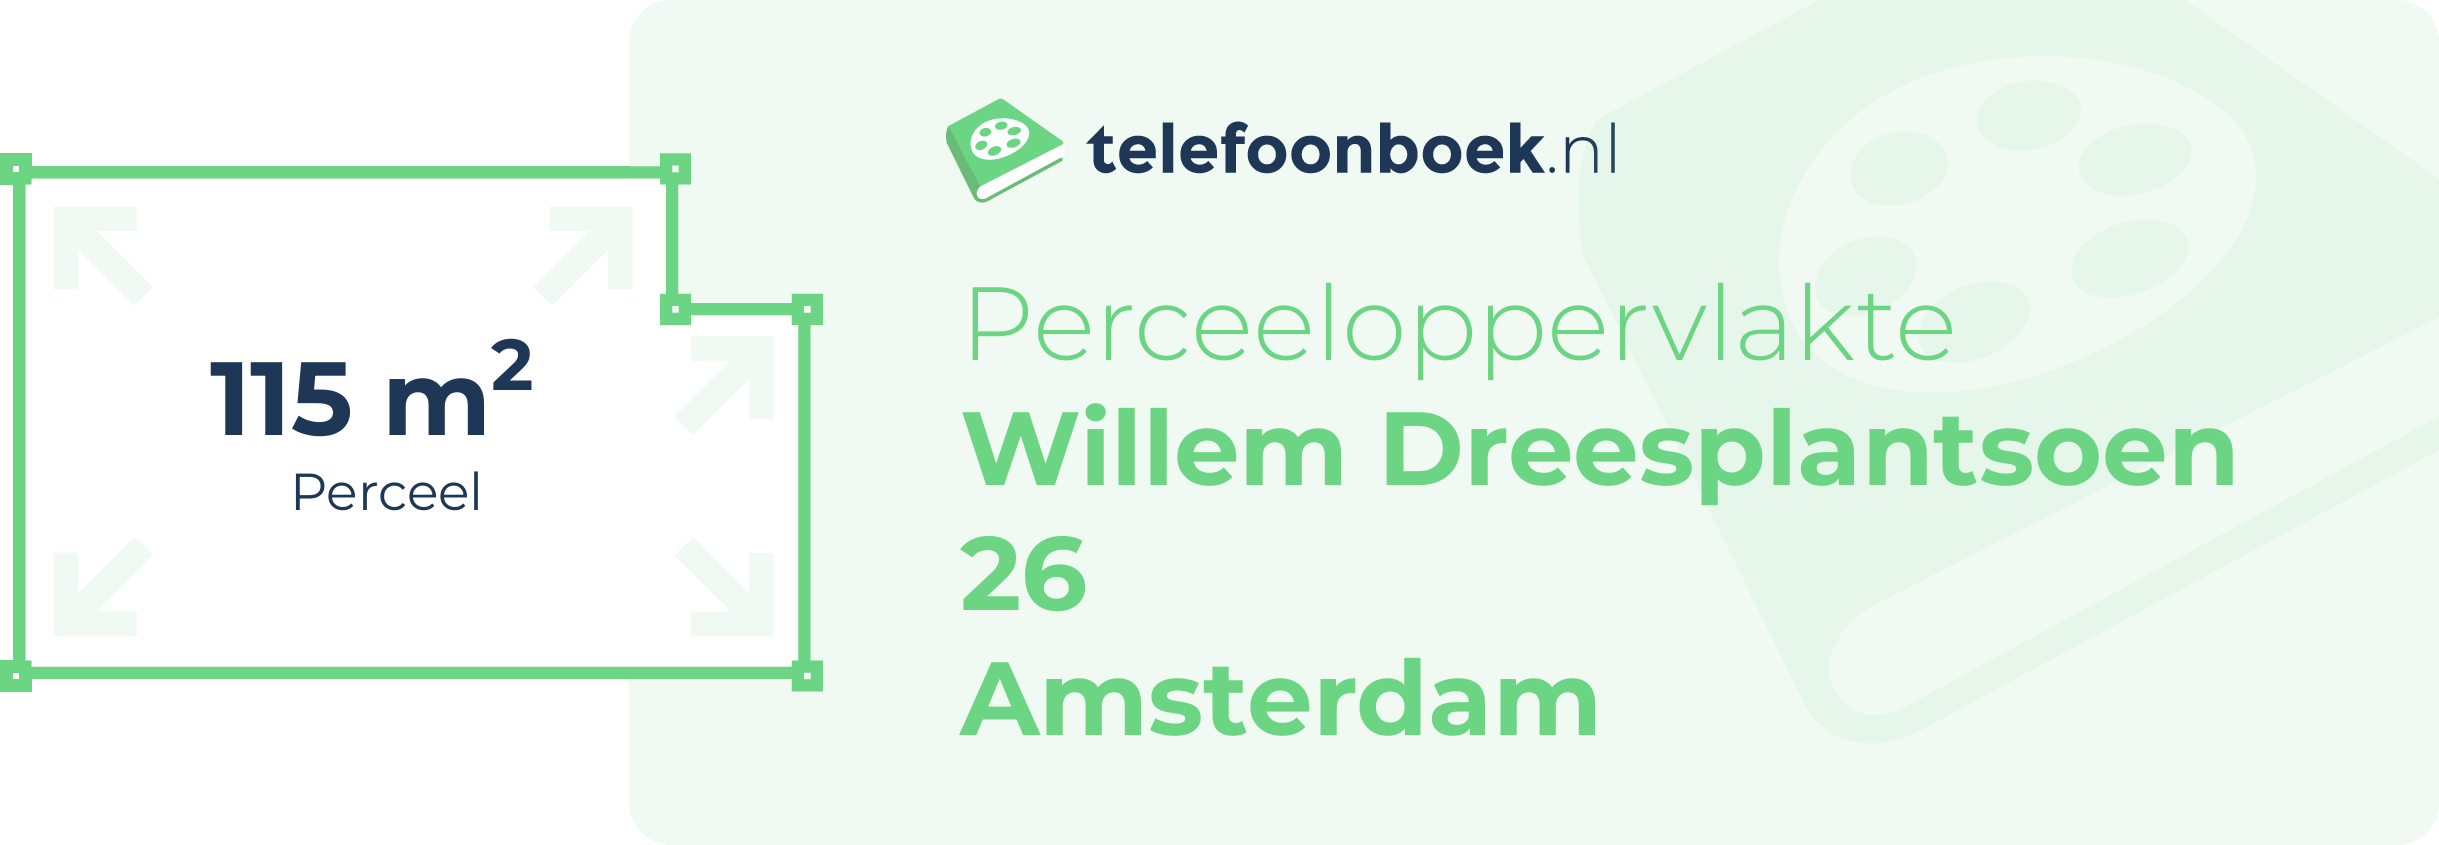 Perceeloppervlakte Willem Dreesplantsoen 26 Amsterdam